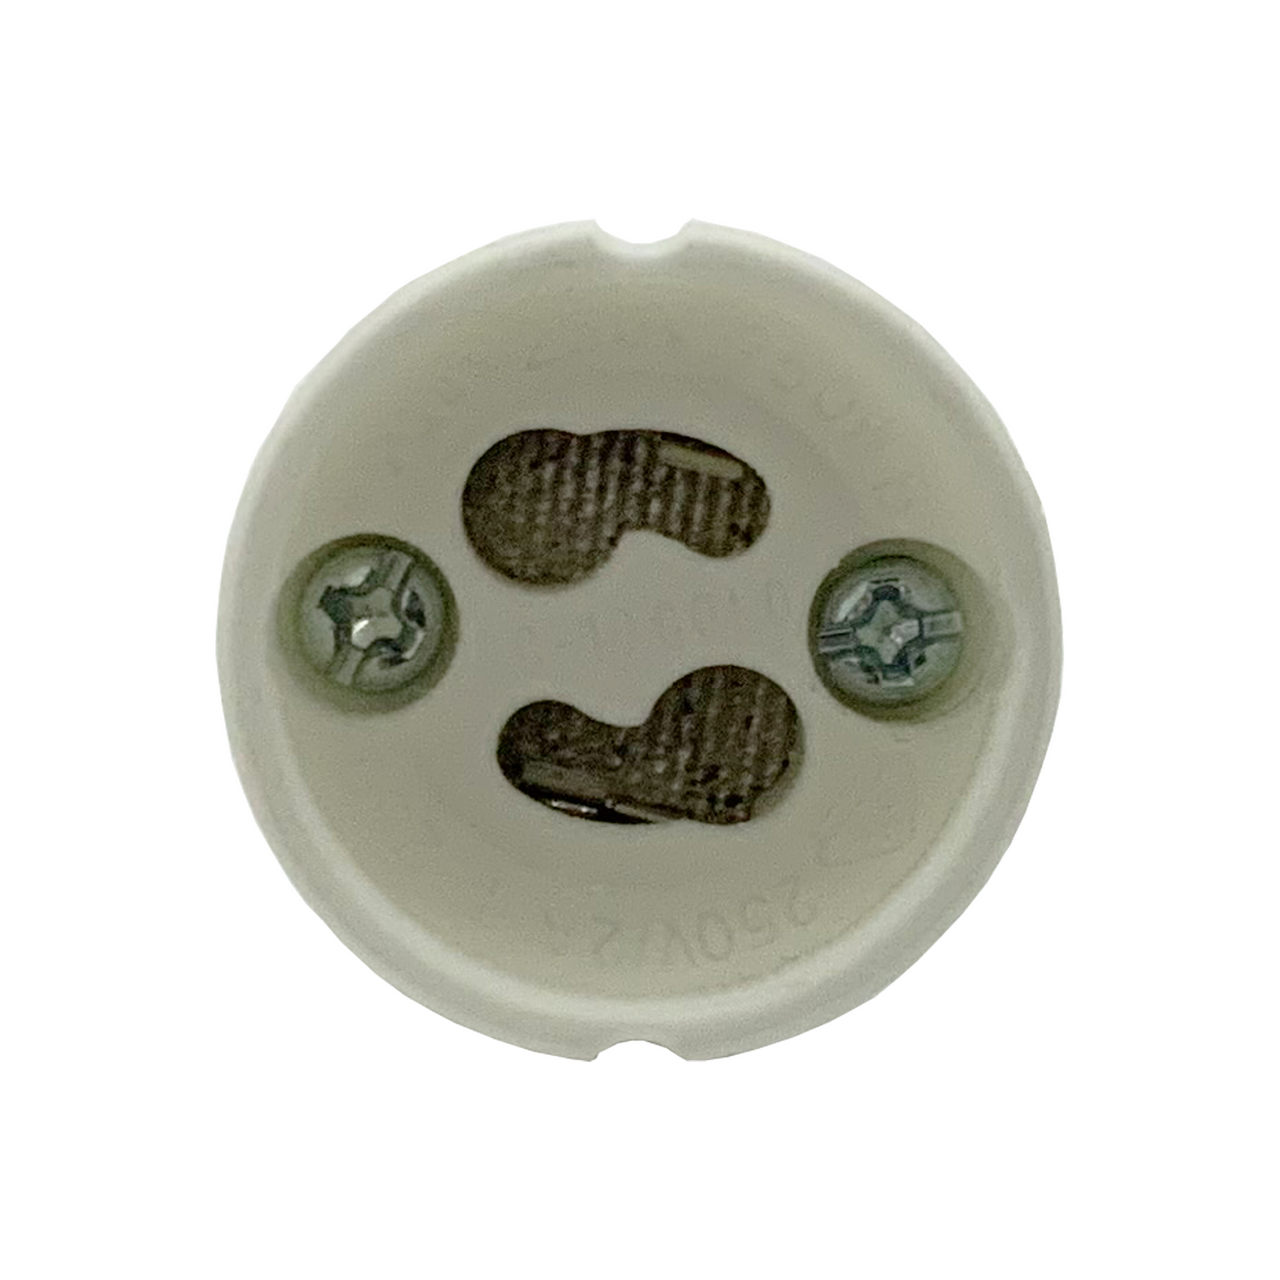 anders Jet Centraliseren Porcelain Halogen Socket - GU10 Twist Lock - 100 Watt Max. |  CityLightsUSA.com